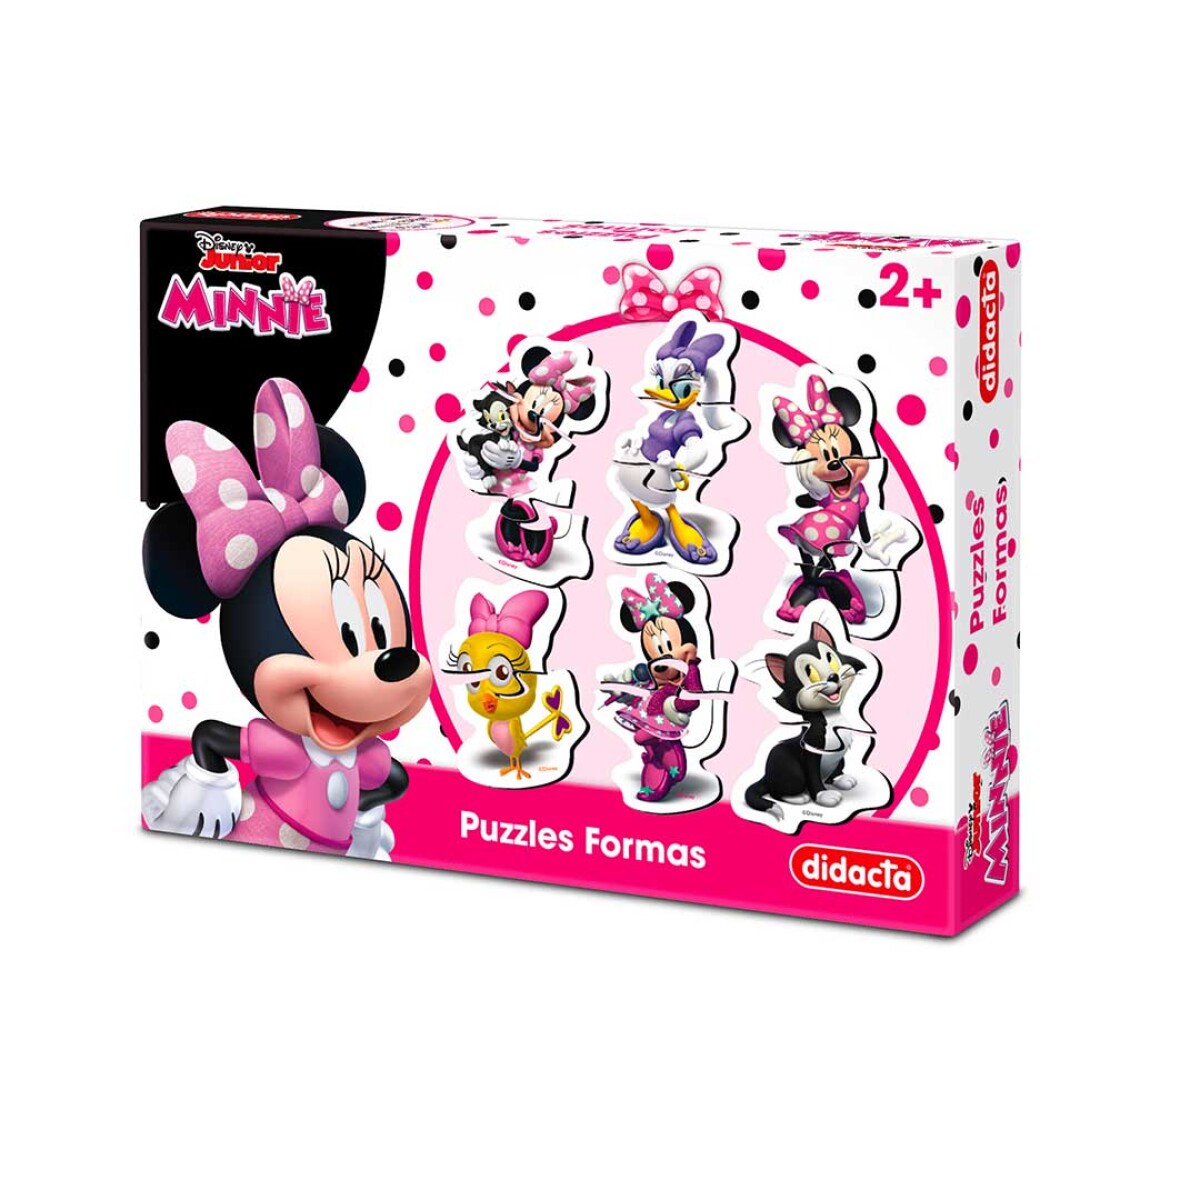 Puzzles de formas Minnie Mouse Didacta set x6 - 001 